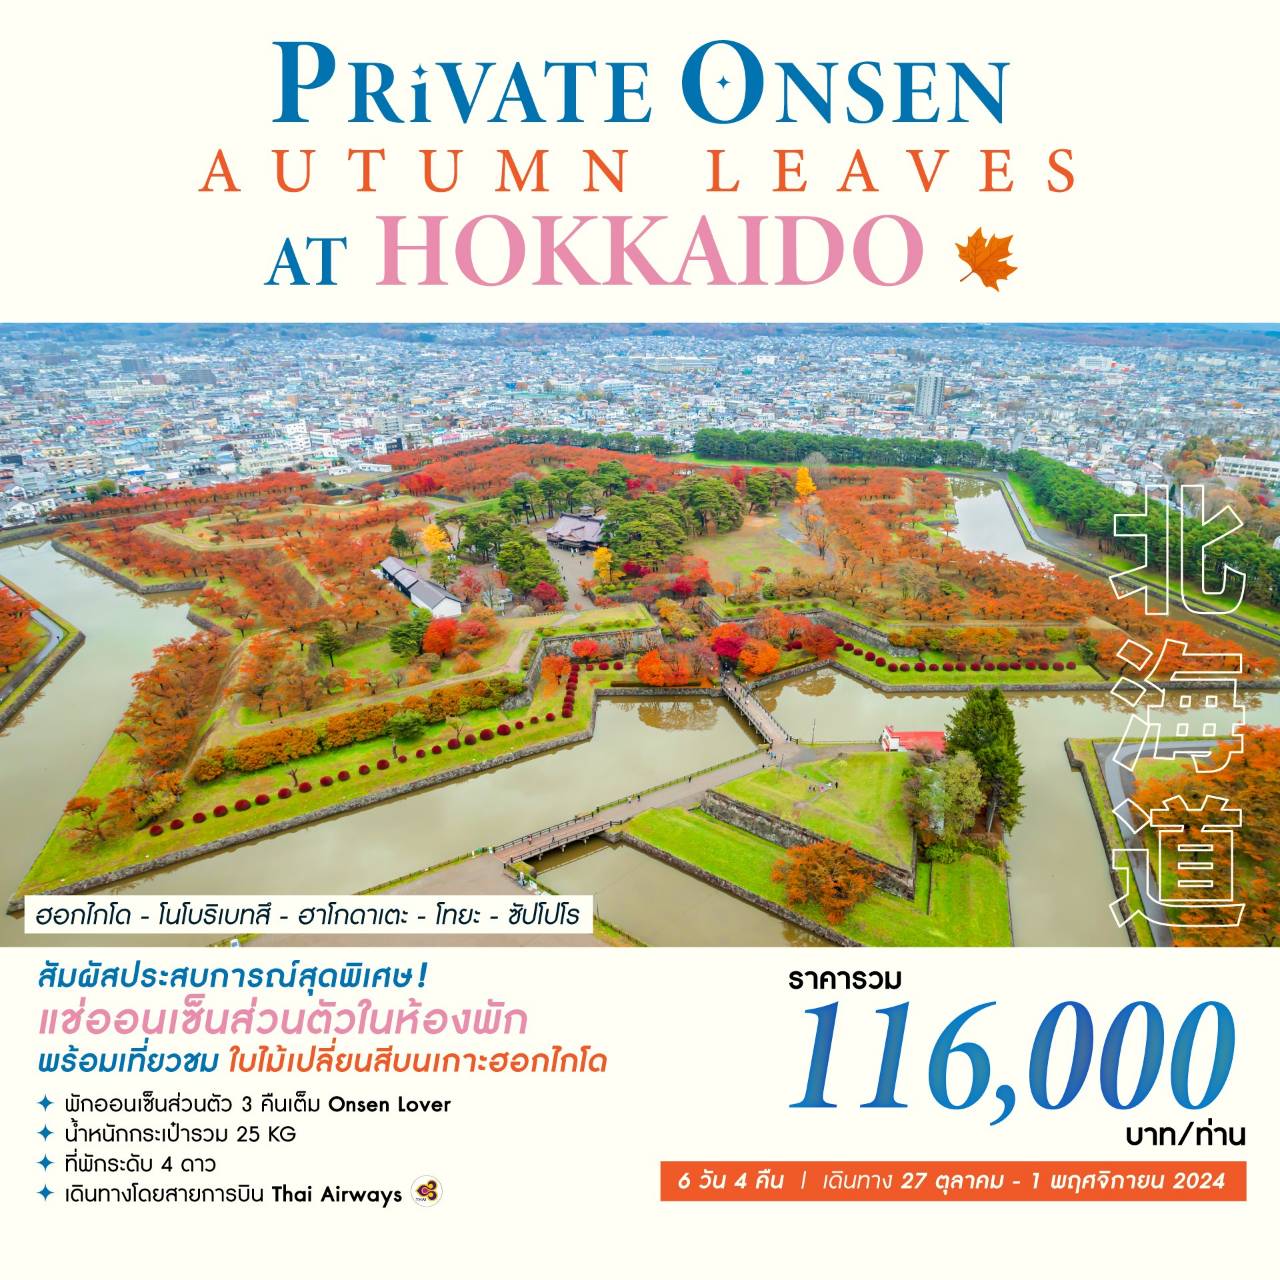 PRIVATE ONSEN AUTUMN LEAVES AT HOKKAIDO